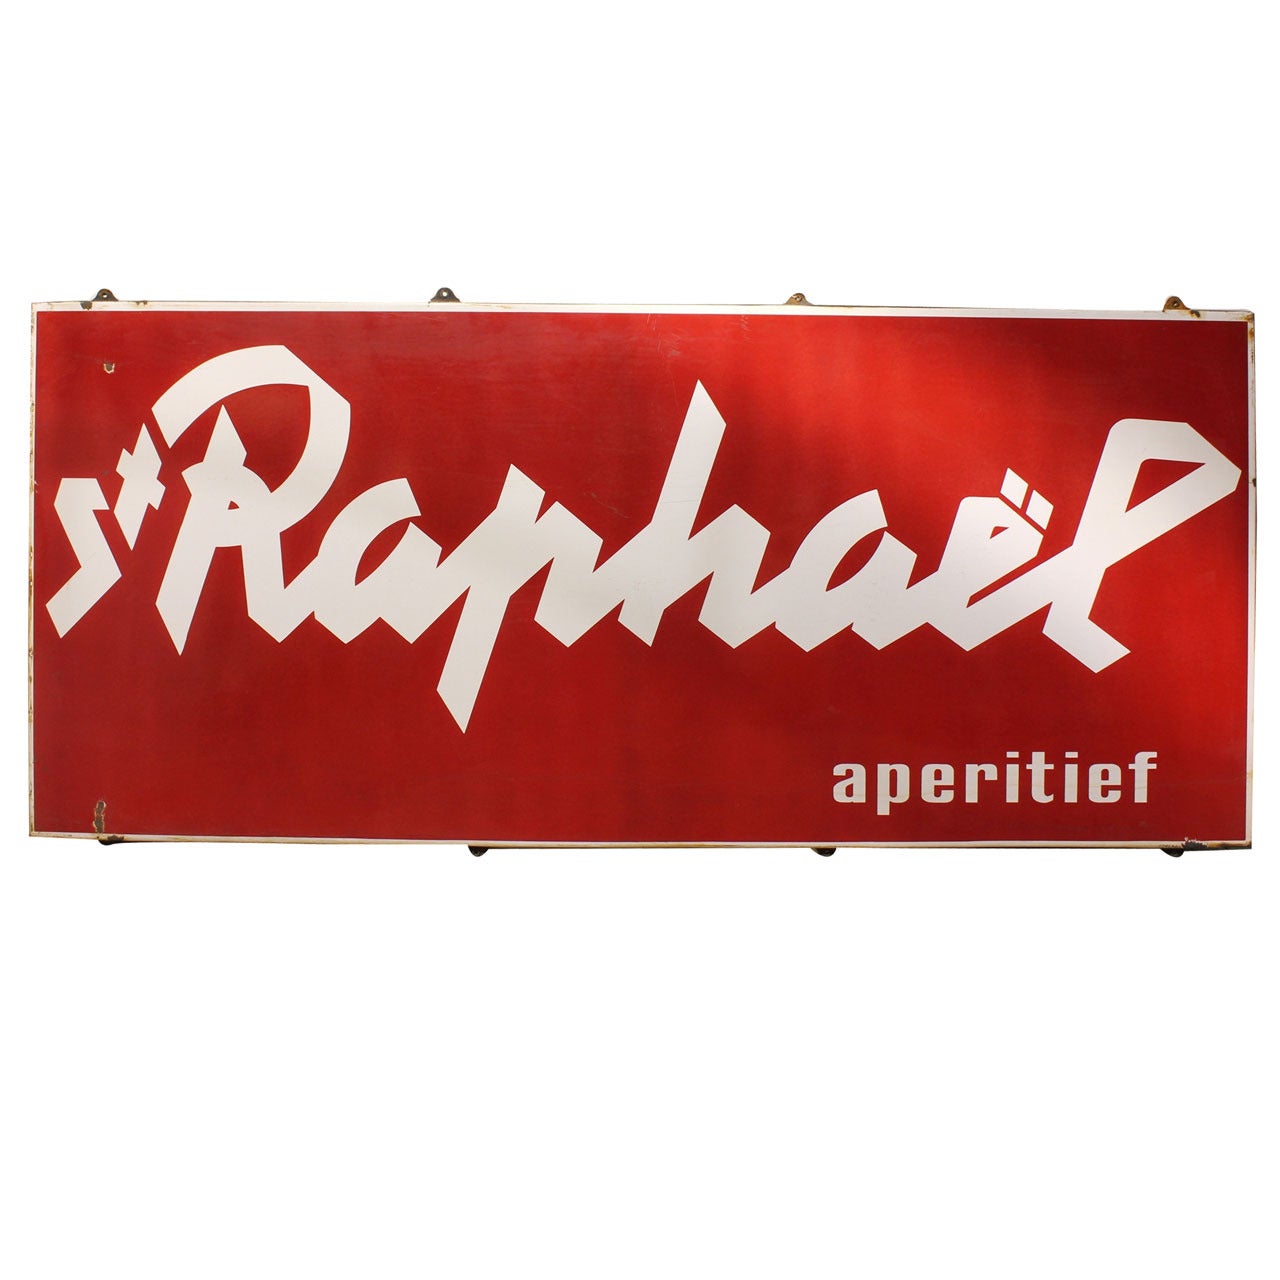 Large 1960's Original Enamel Sign St. Raphael Aperitief For Sale